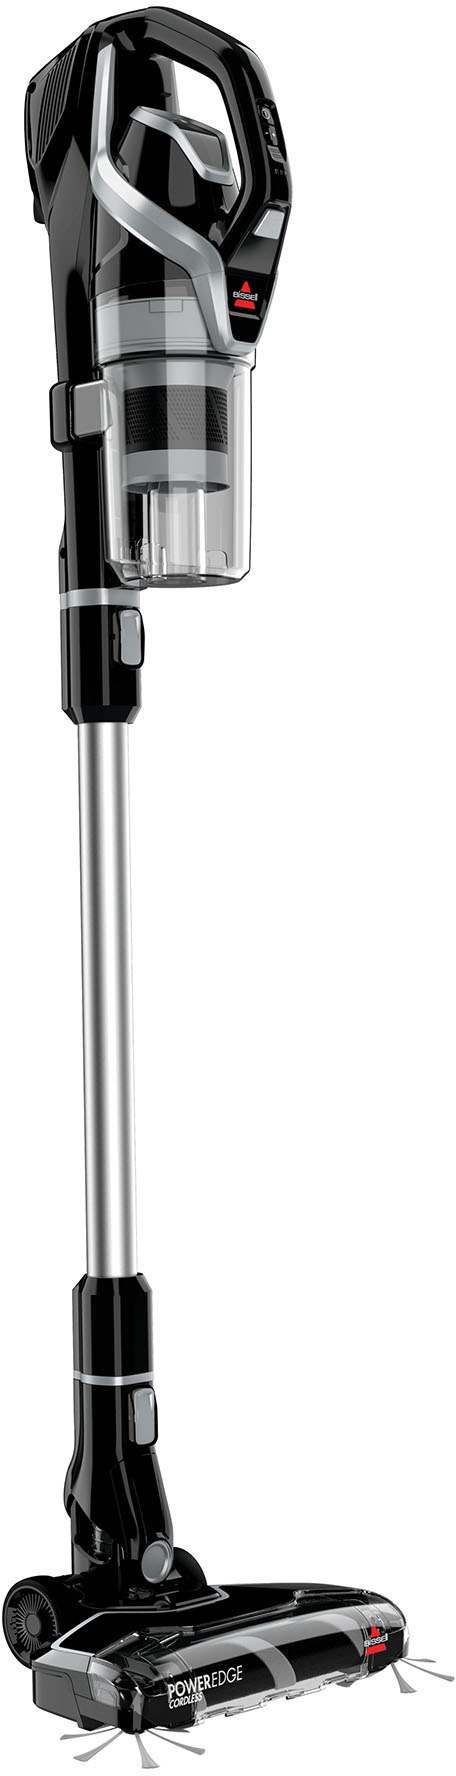 BISSELL® PowerEdge® Cordless Stick Vac 29001